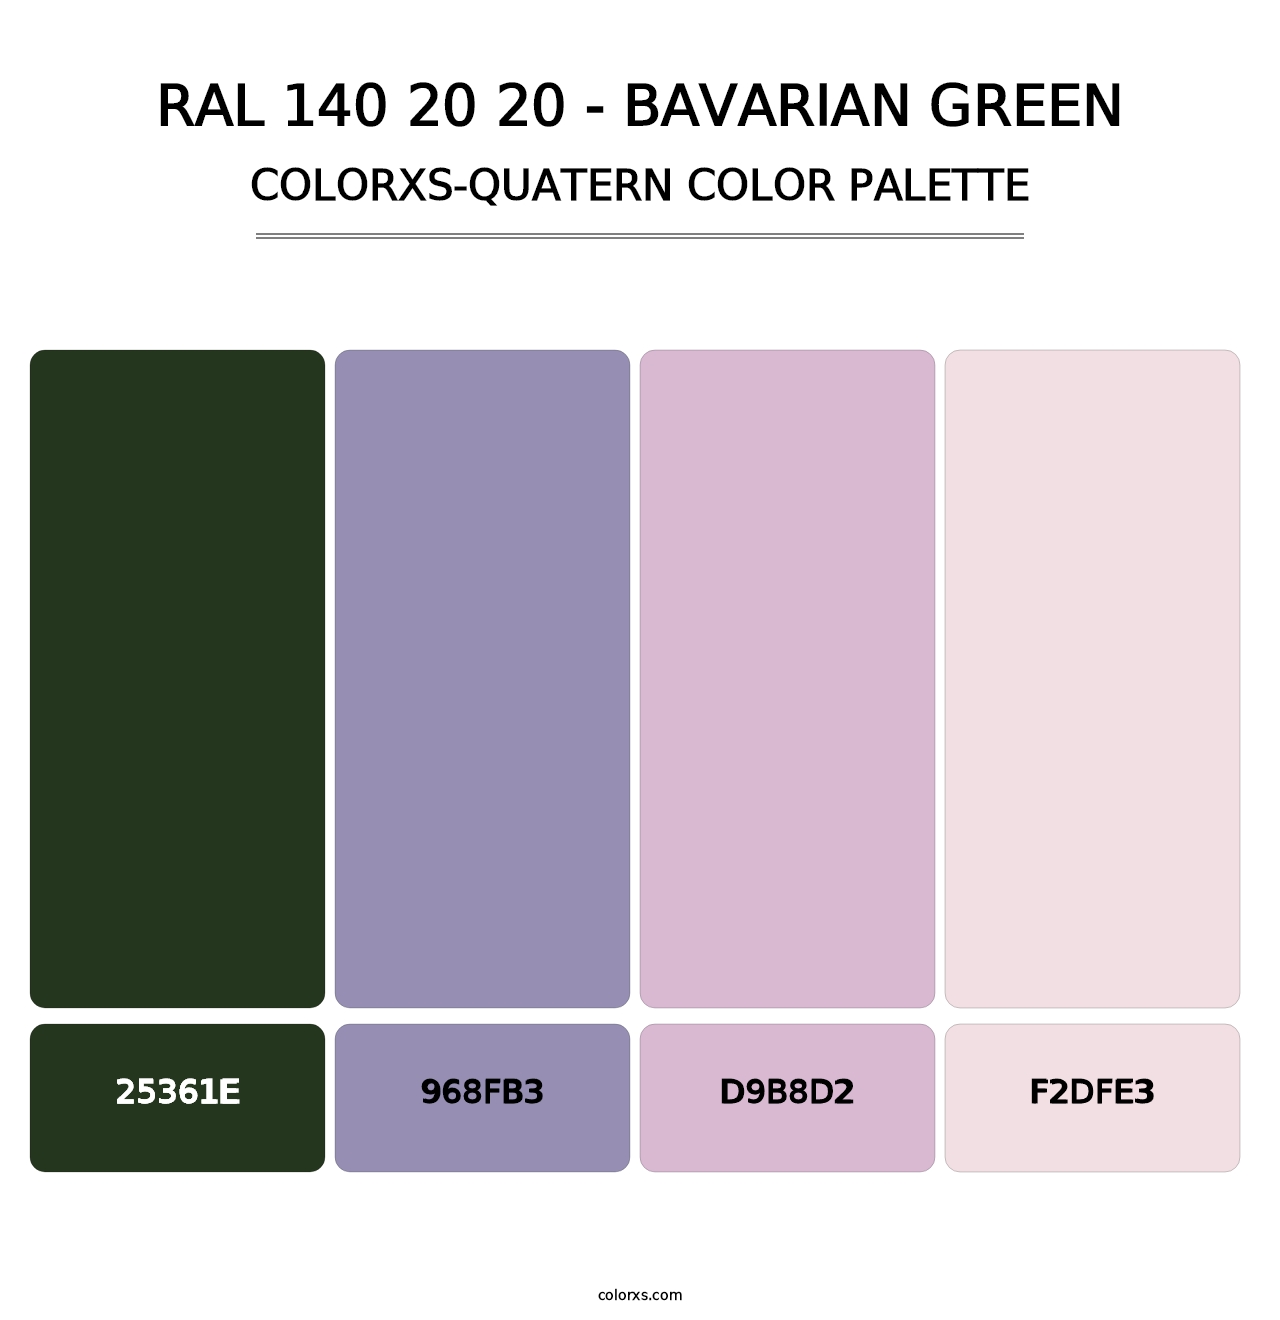 RAL 140 20 20 - Bavarian Green - Colorxs Quatern Palette